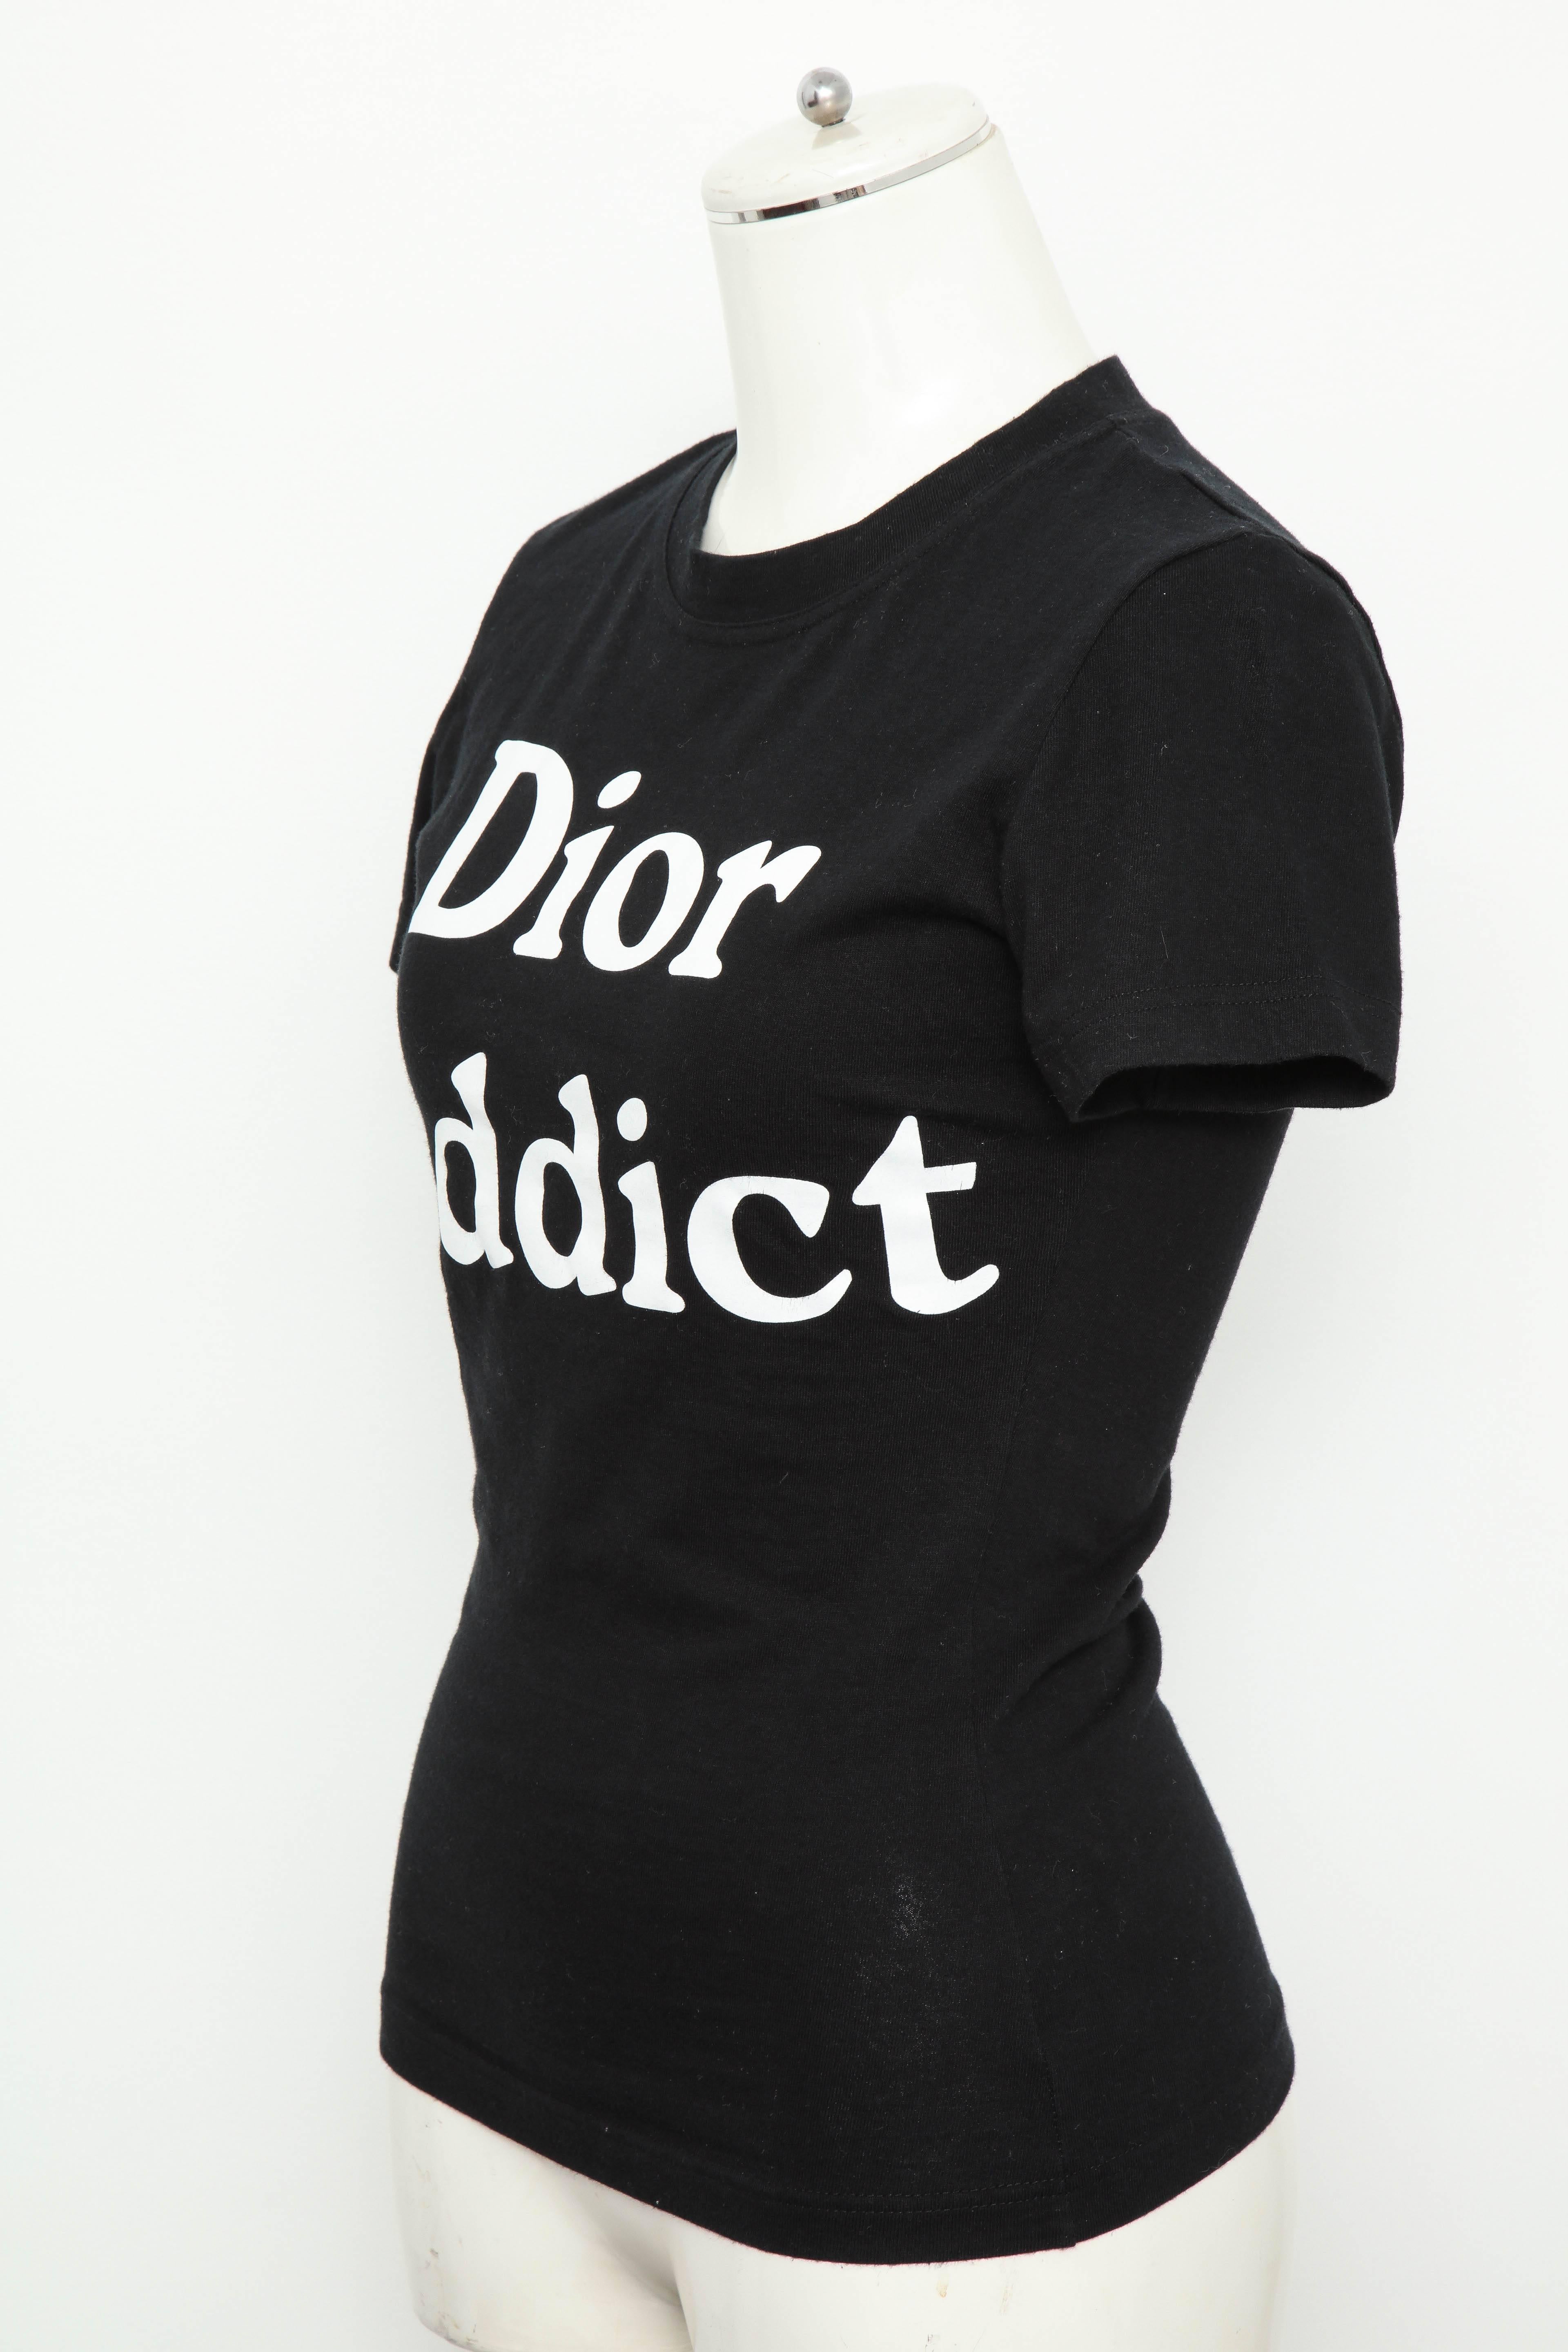 dior addict t shirt